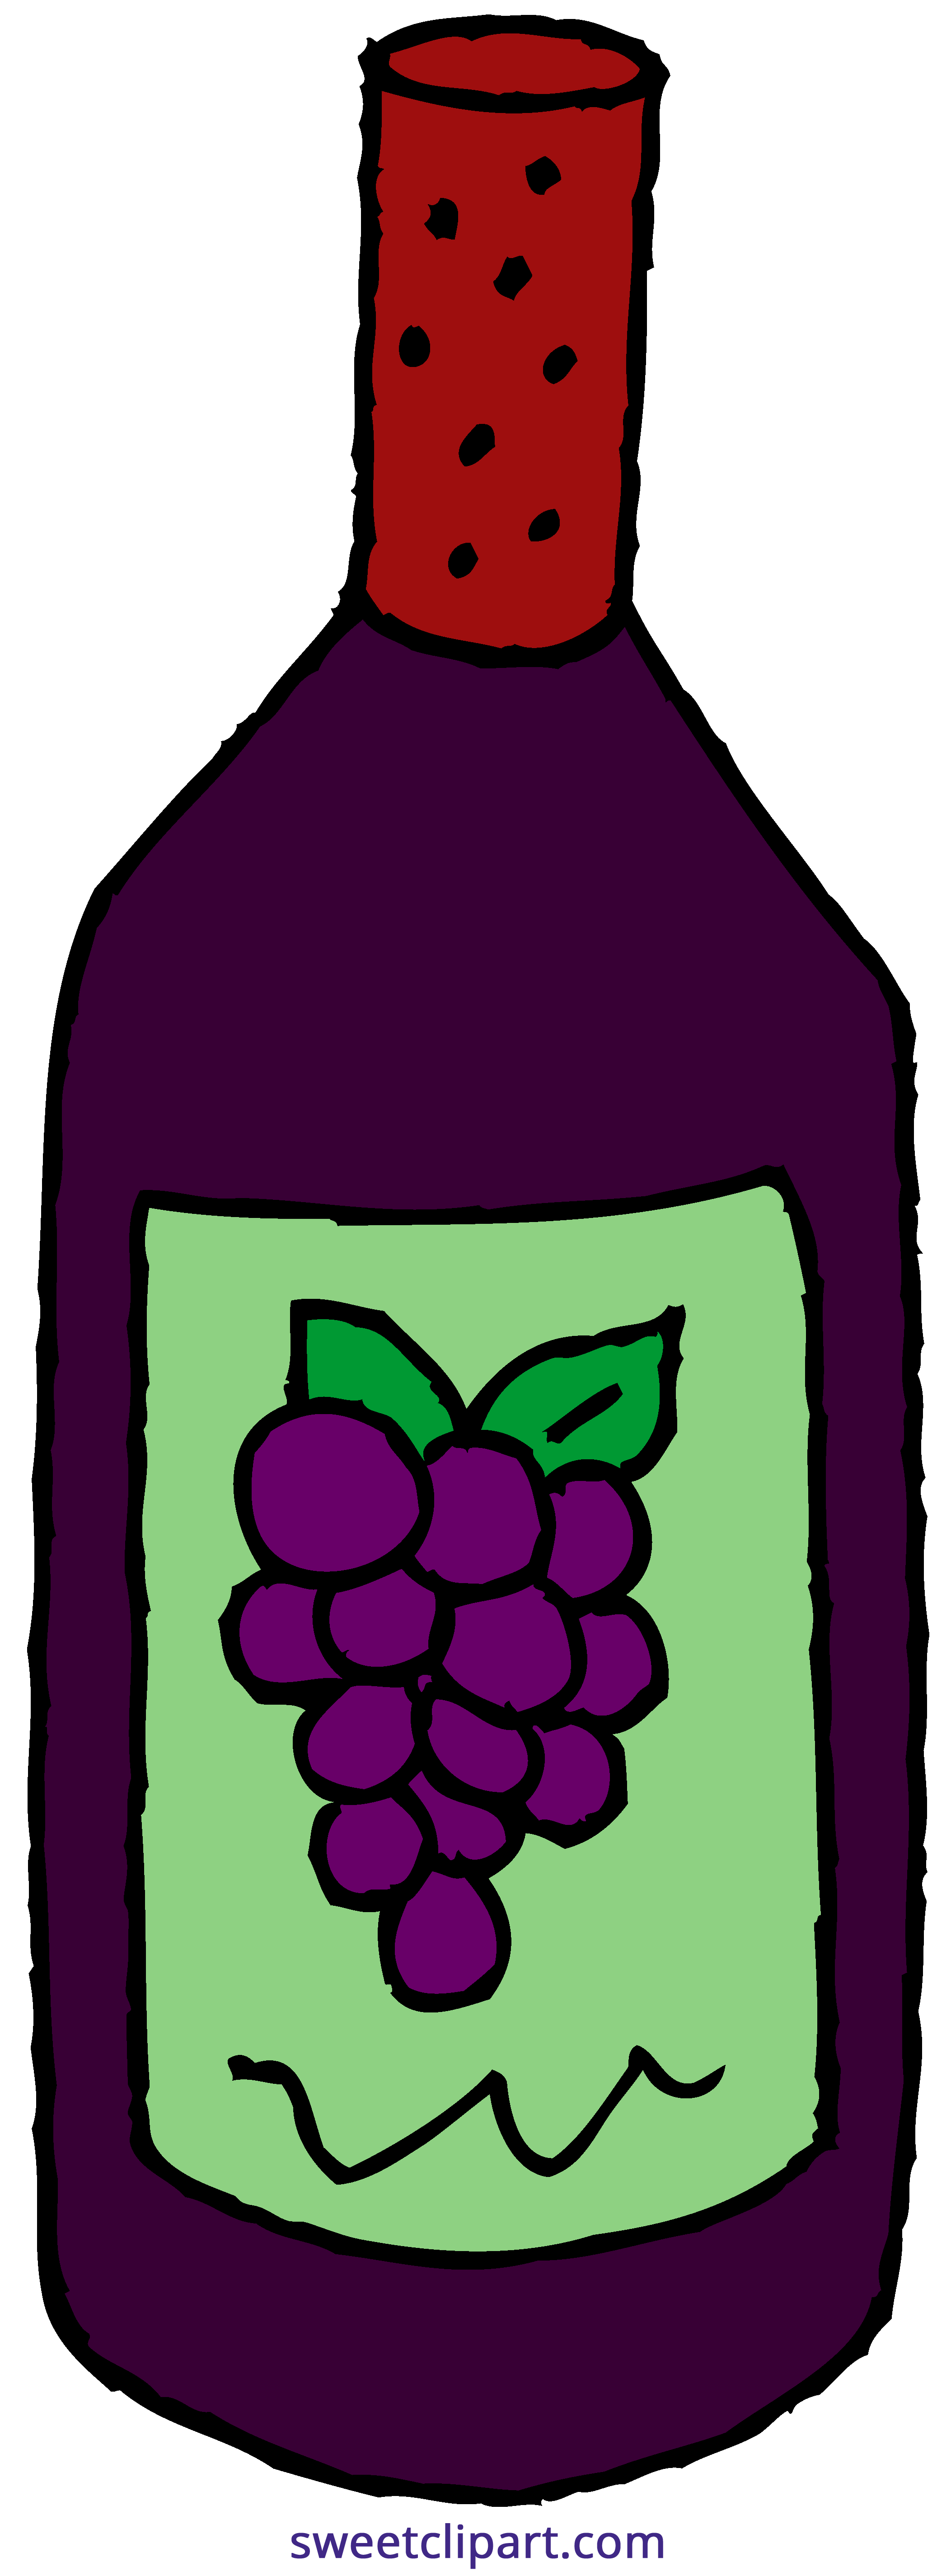 Grape clipart wine grape. Bottle sweet clip art